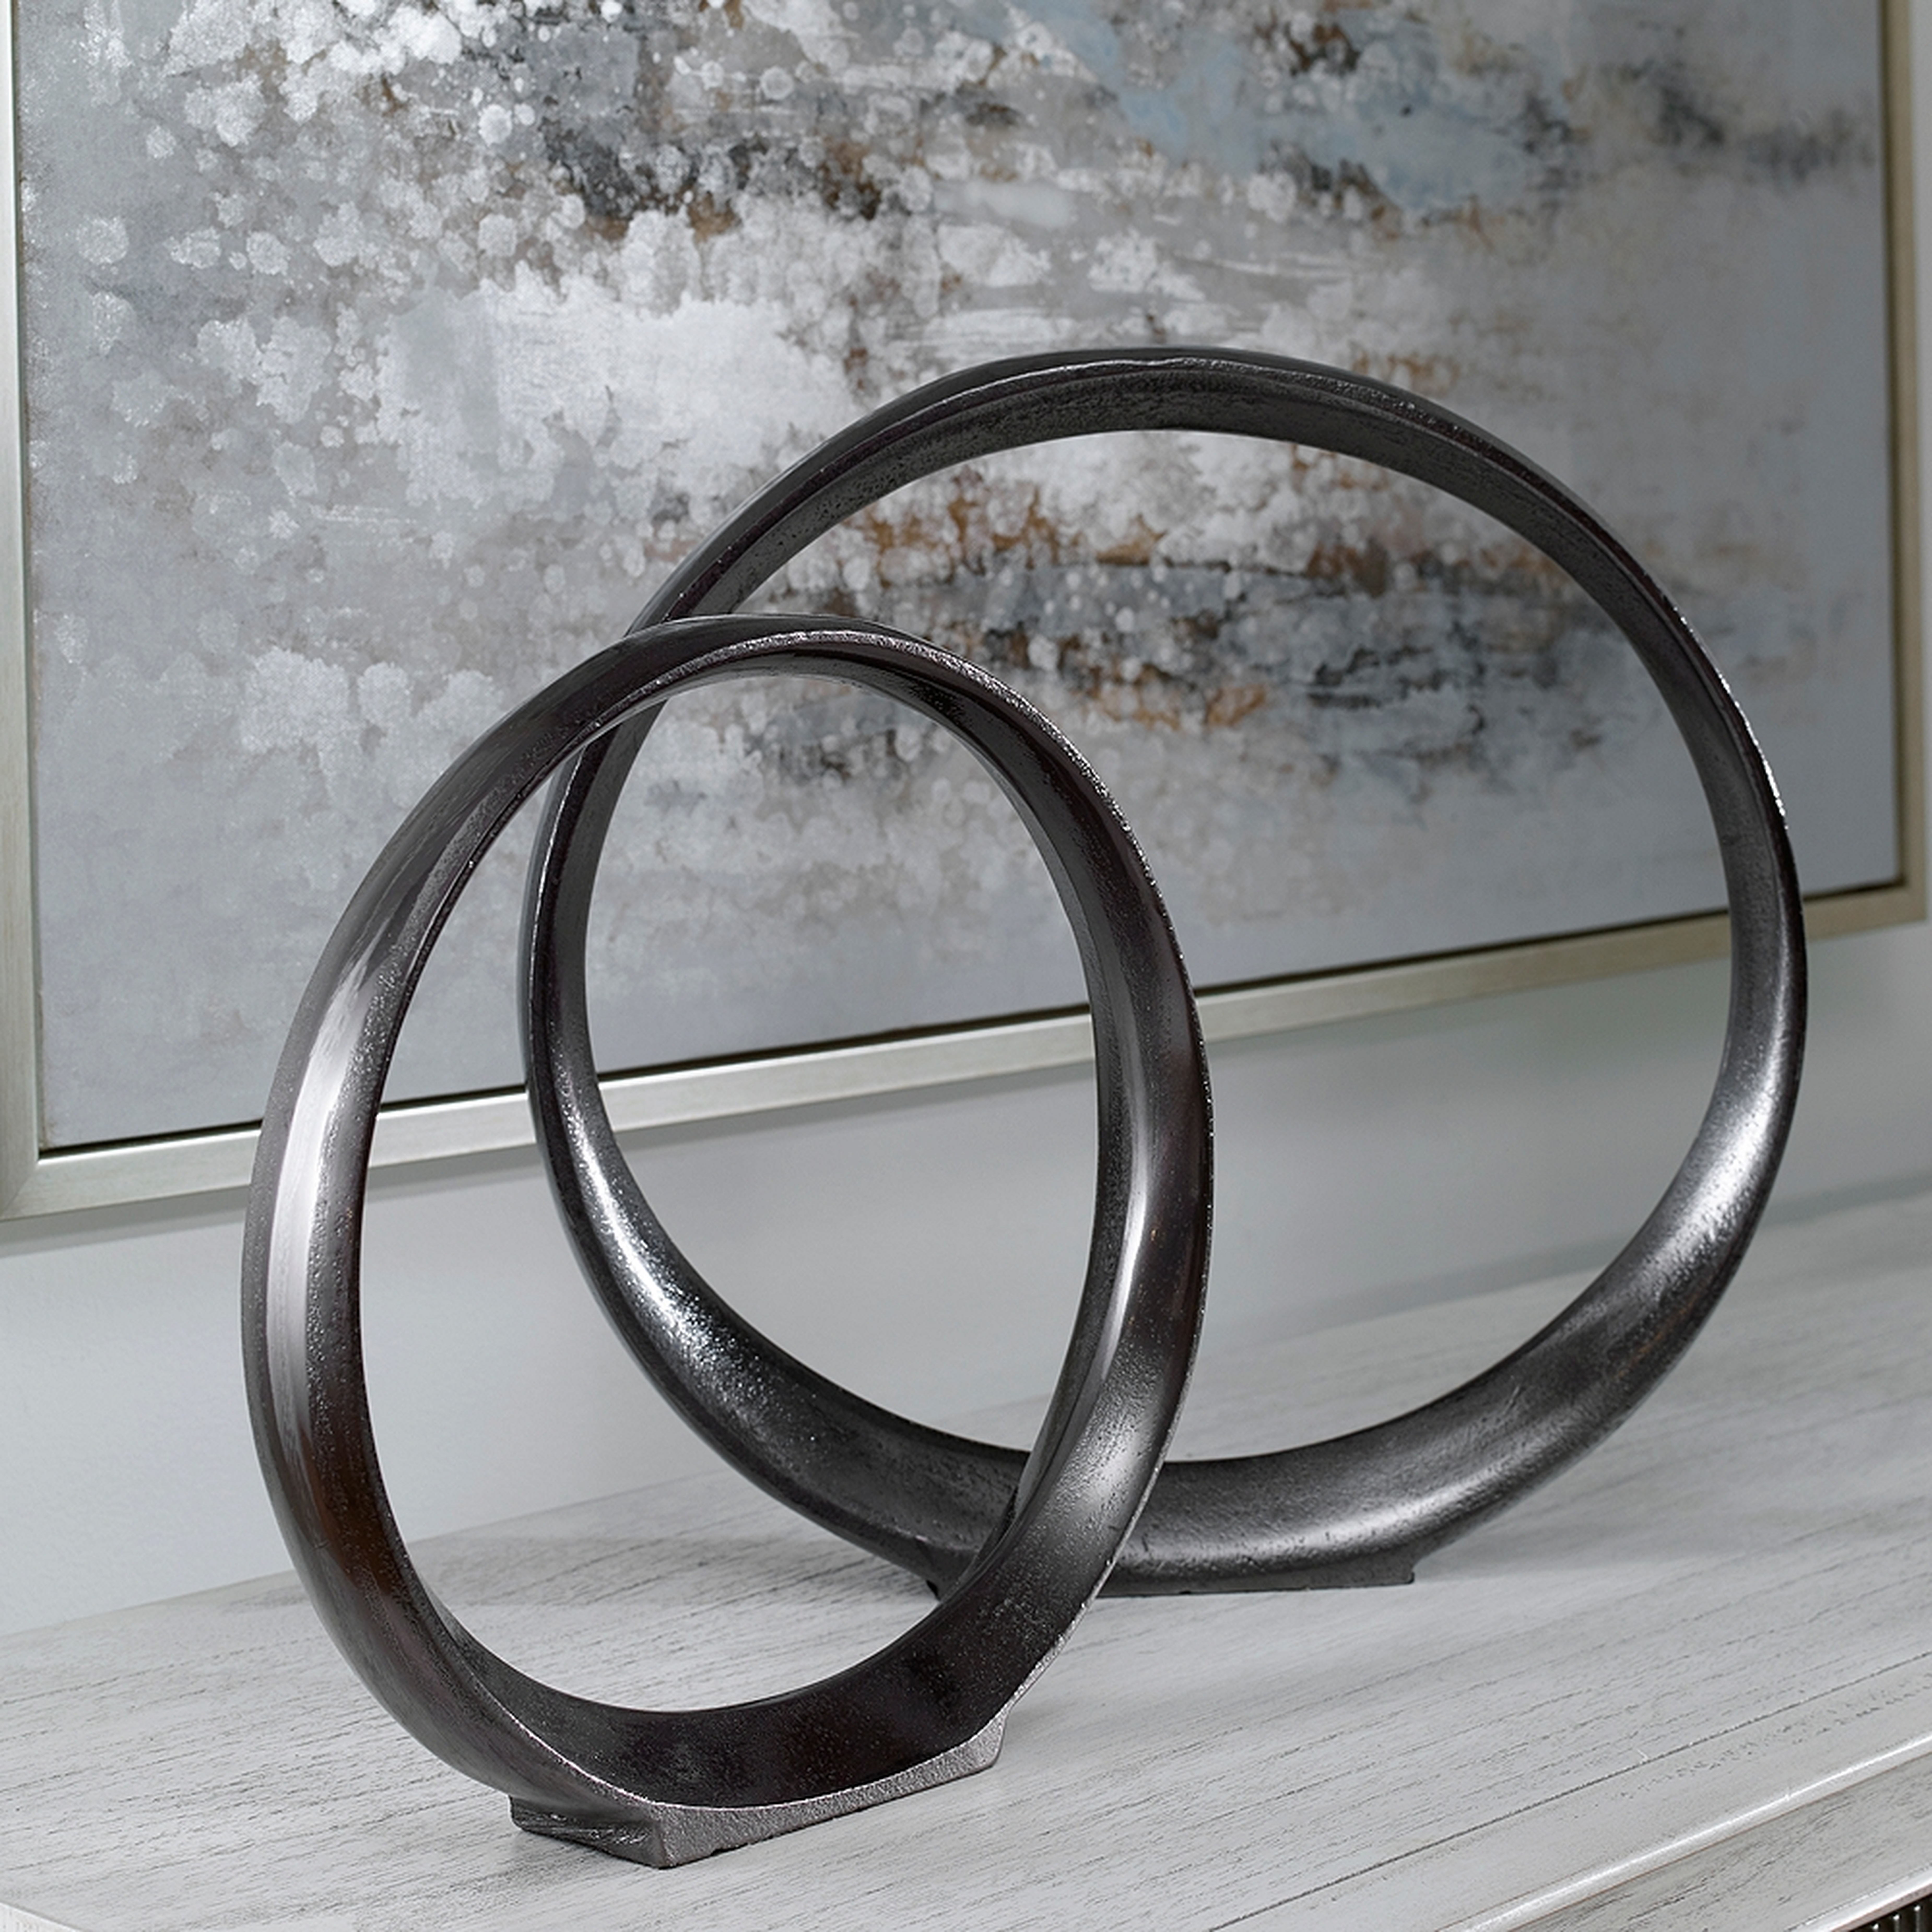 Uttermost Orbits Black Nickel Ring Sculptures Set of 2 - Style # 94N06 - Lamps Plus